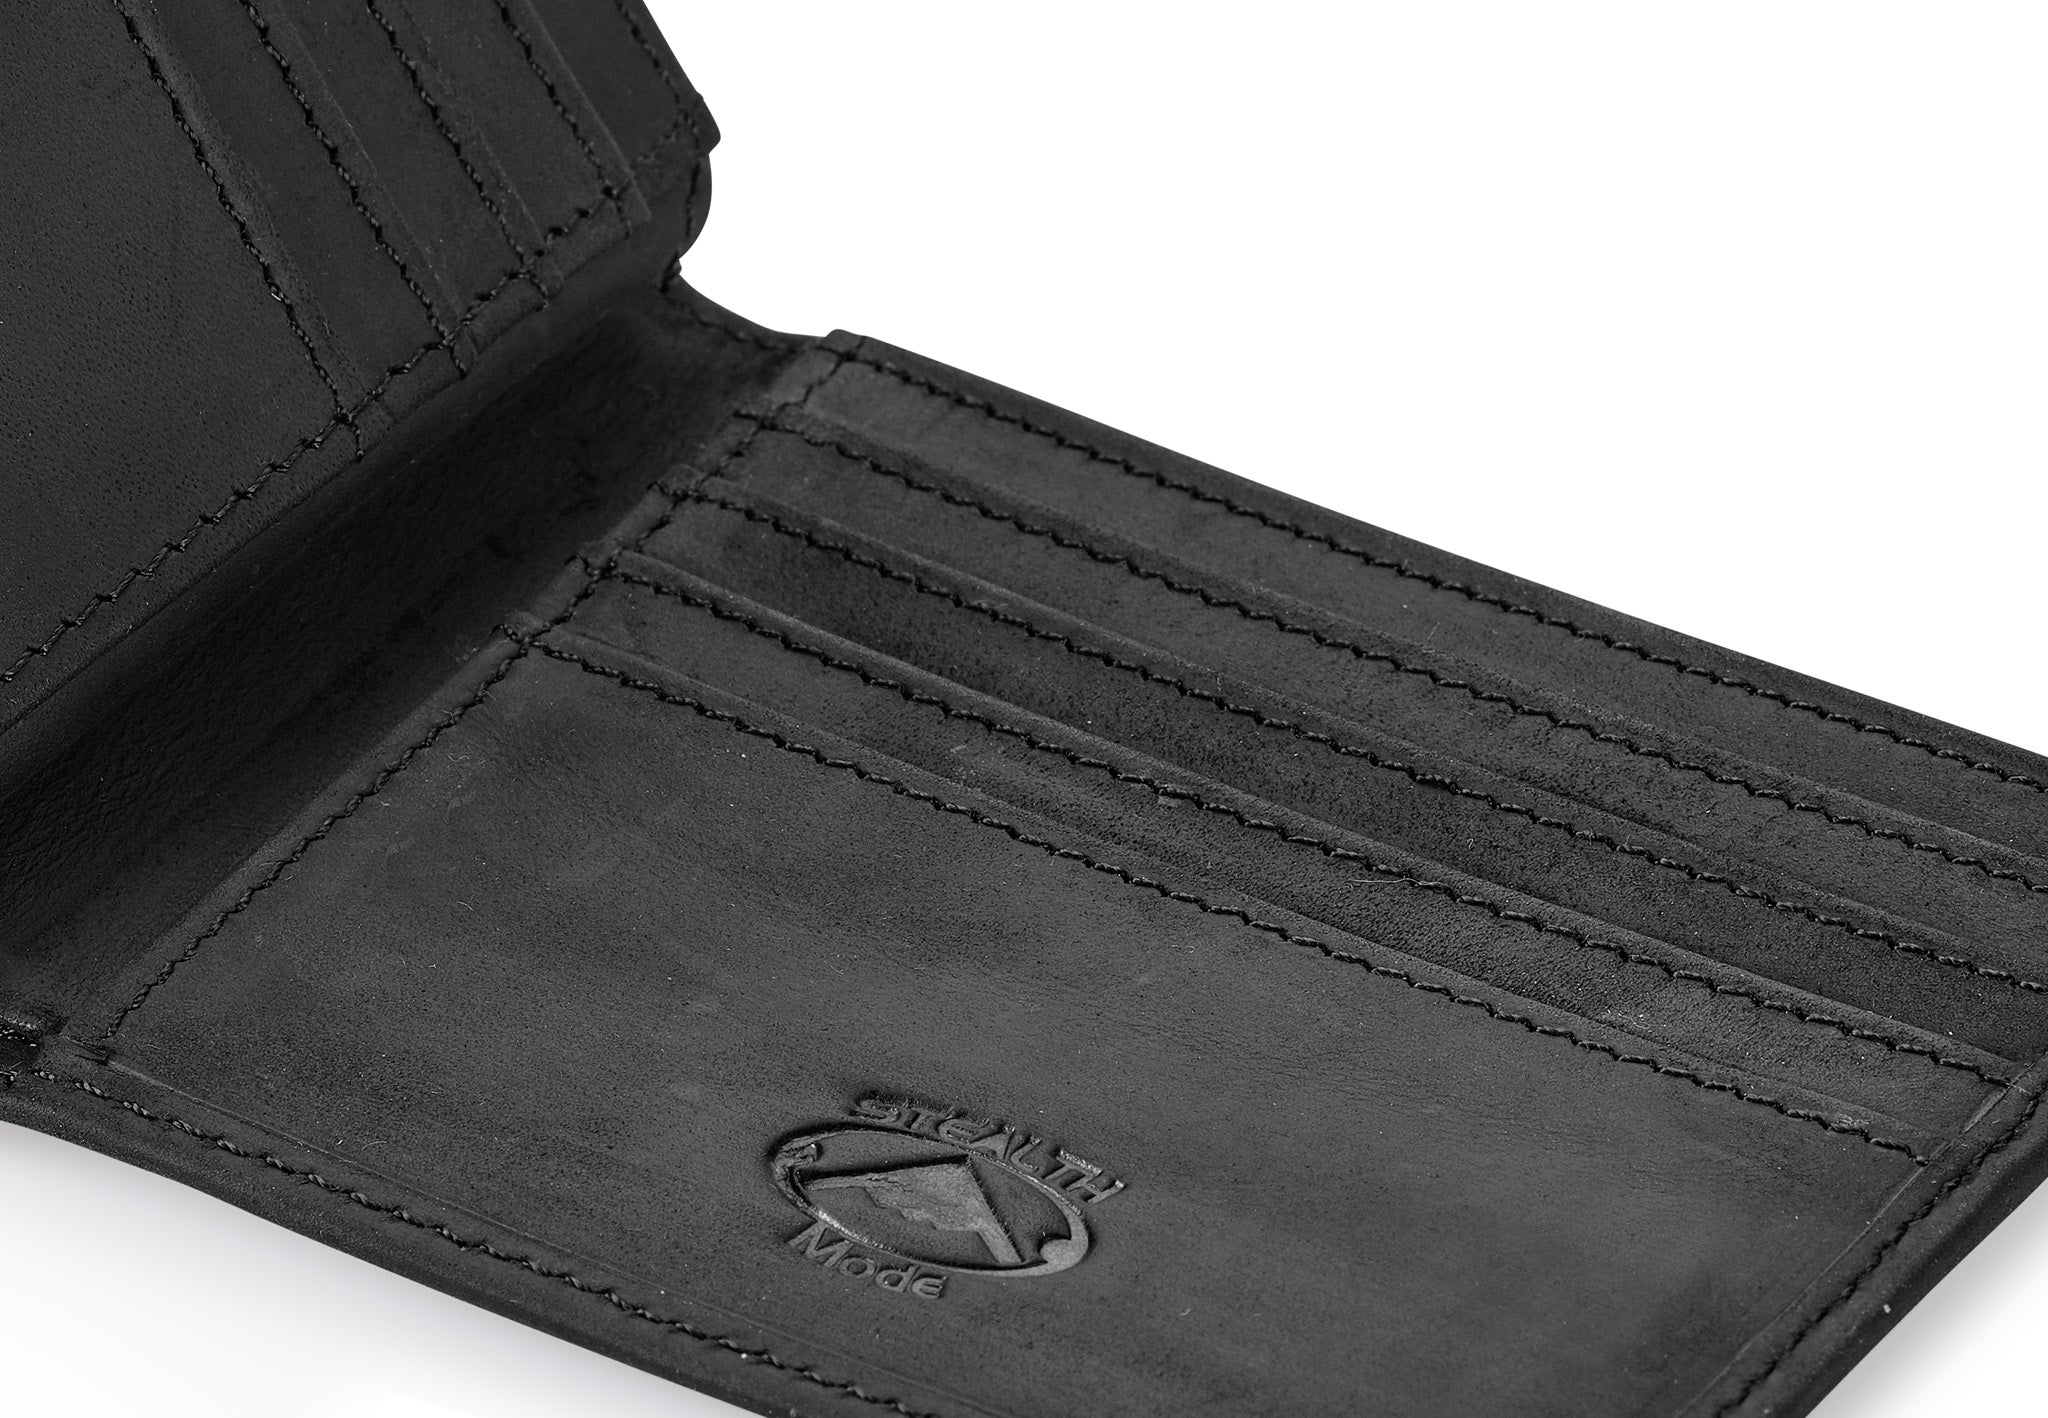 RFID Blocking Crocodile Pattern Premium Leather Credit Card Holder Wallet 19 Card Slots + 1 ID Window with Snap Closure Rfidp1629cr , Black